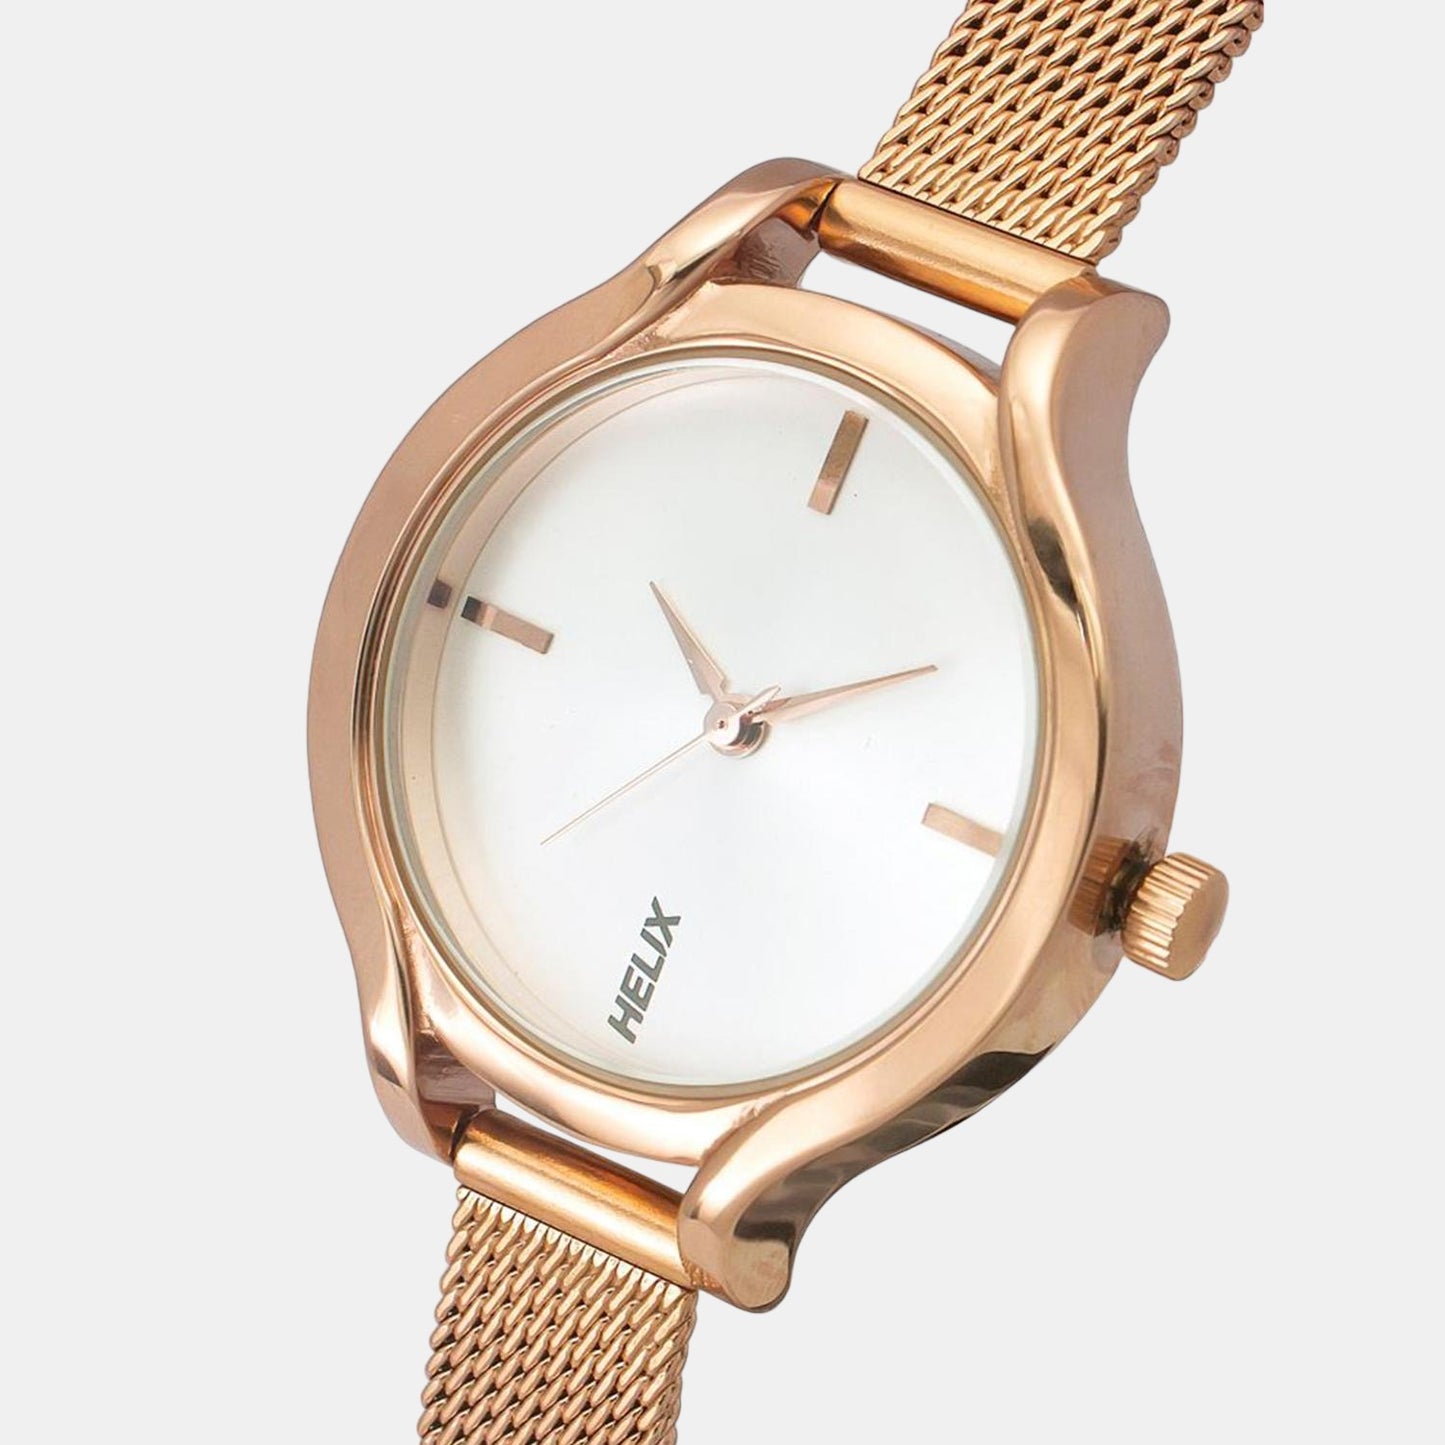 helix-silver-analog-women-watch-tw027hl22